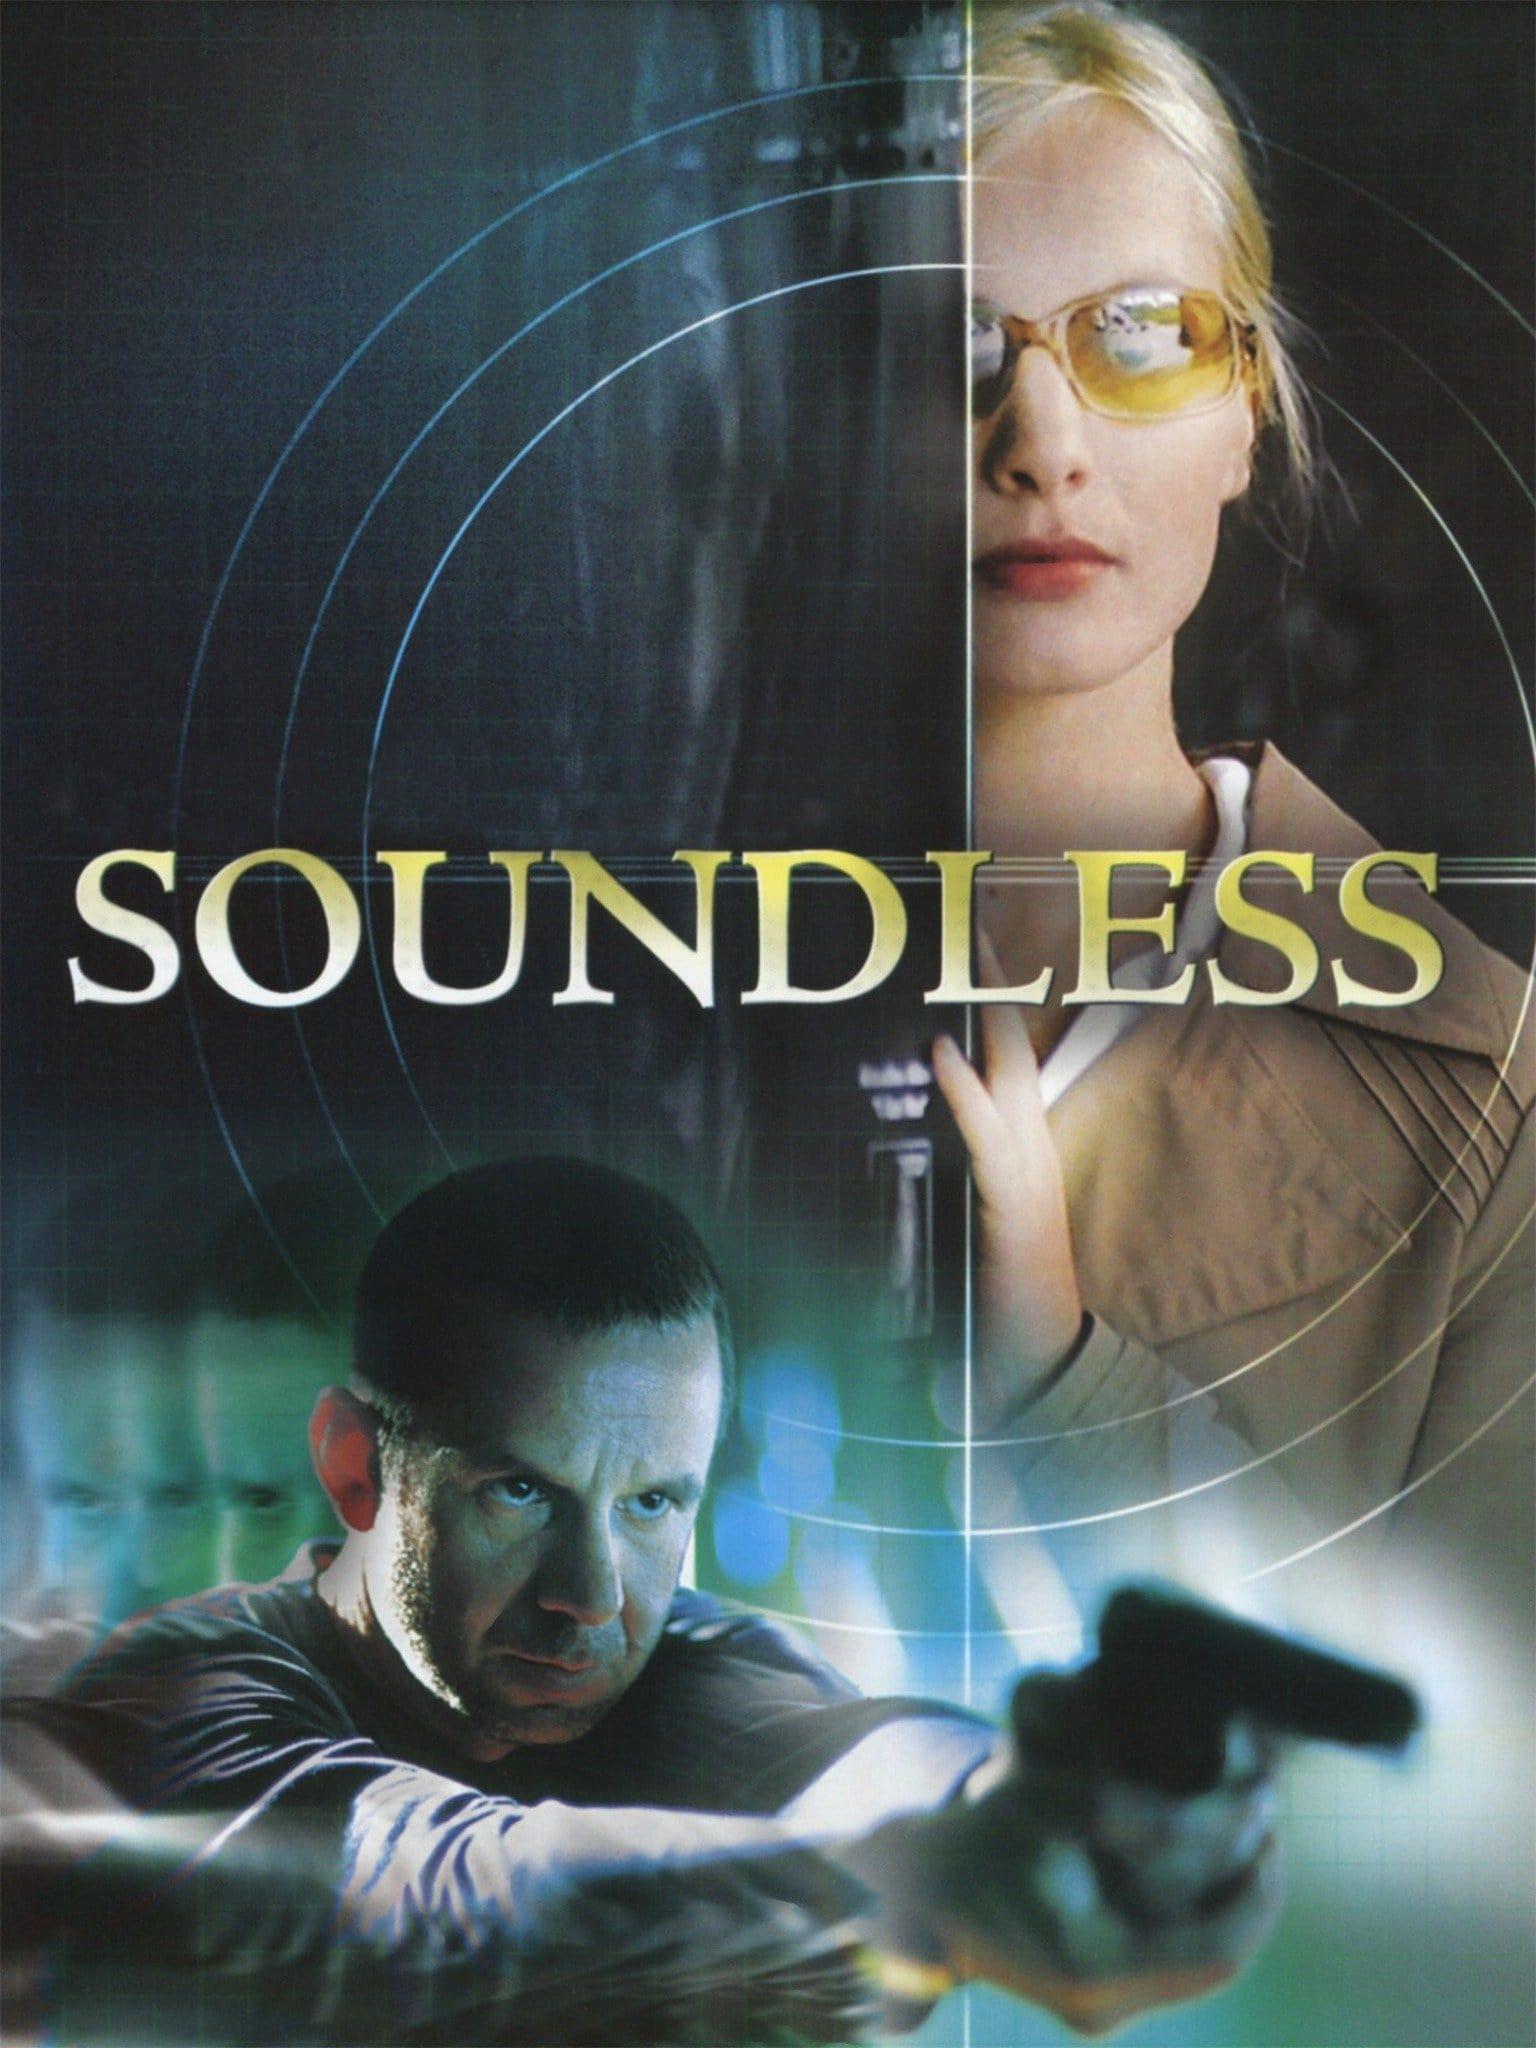 Soundless poster